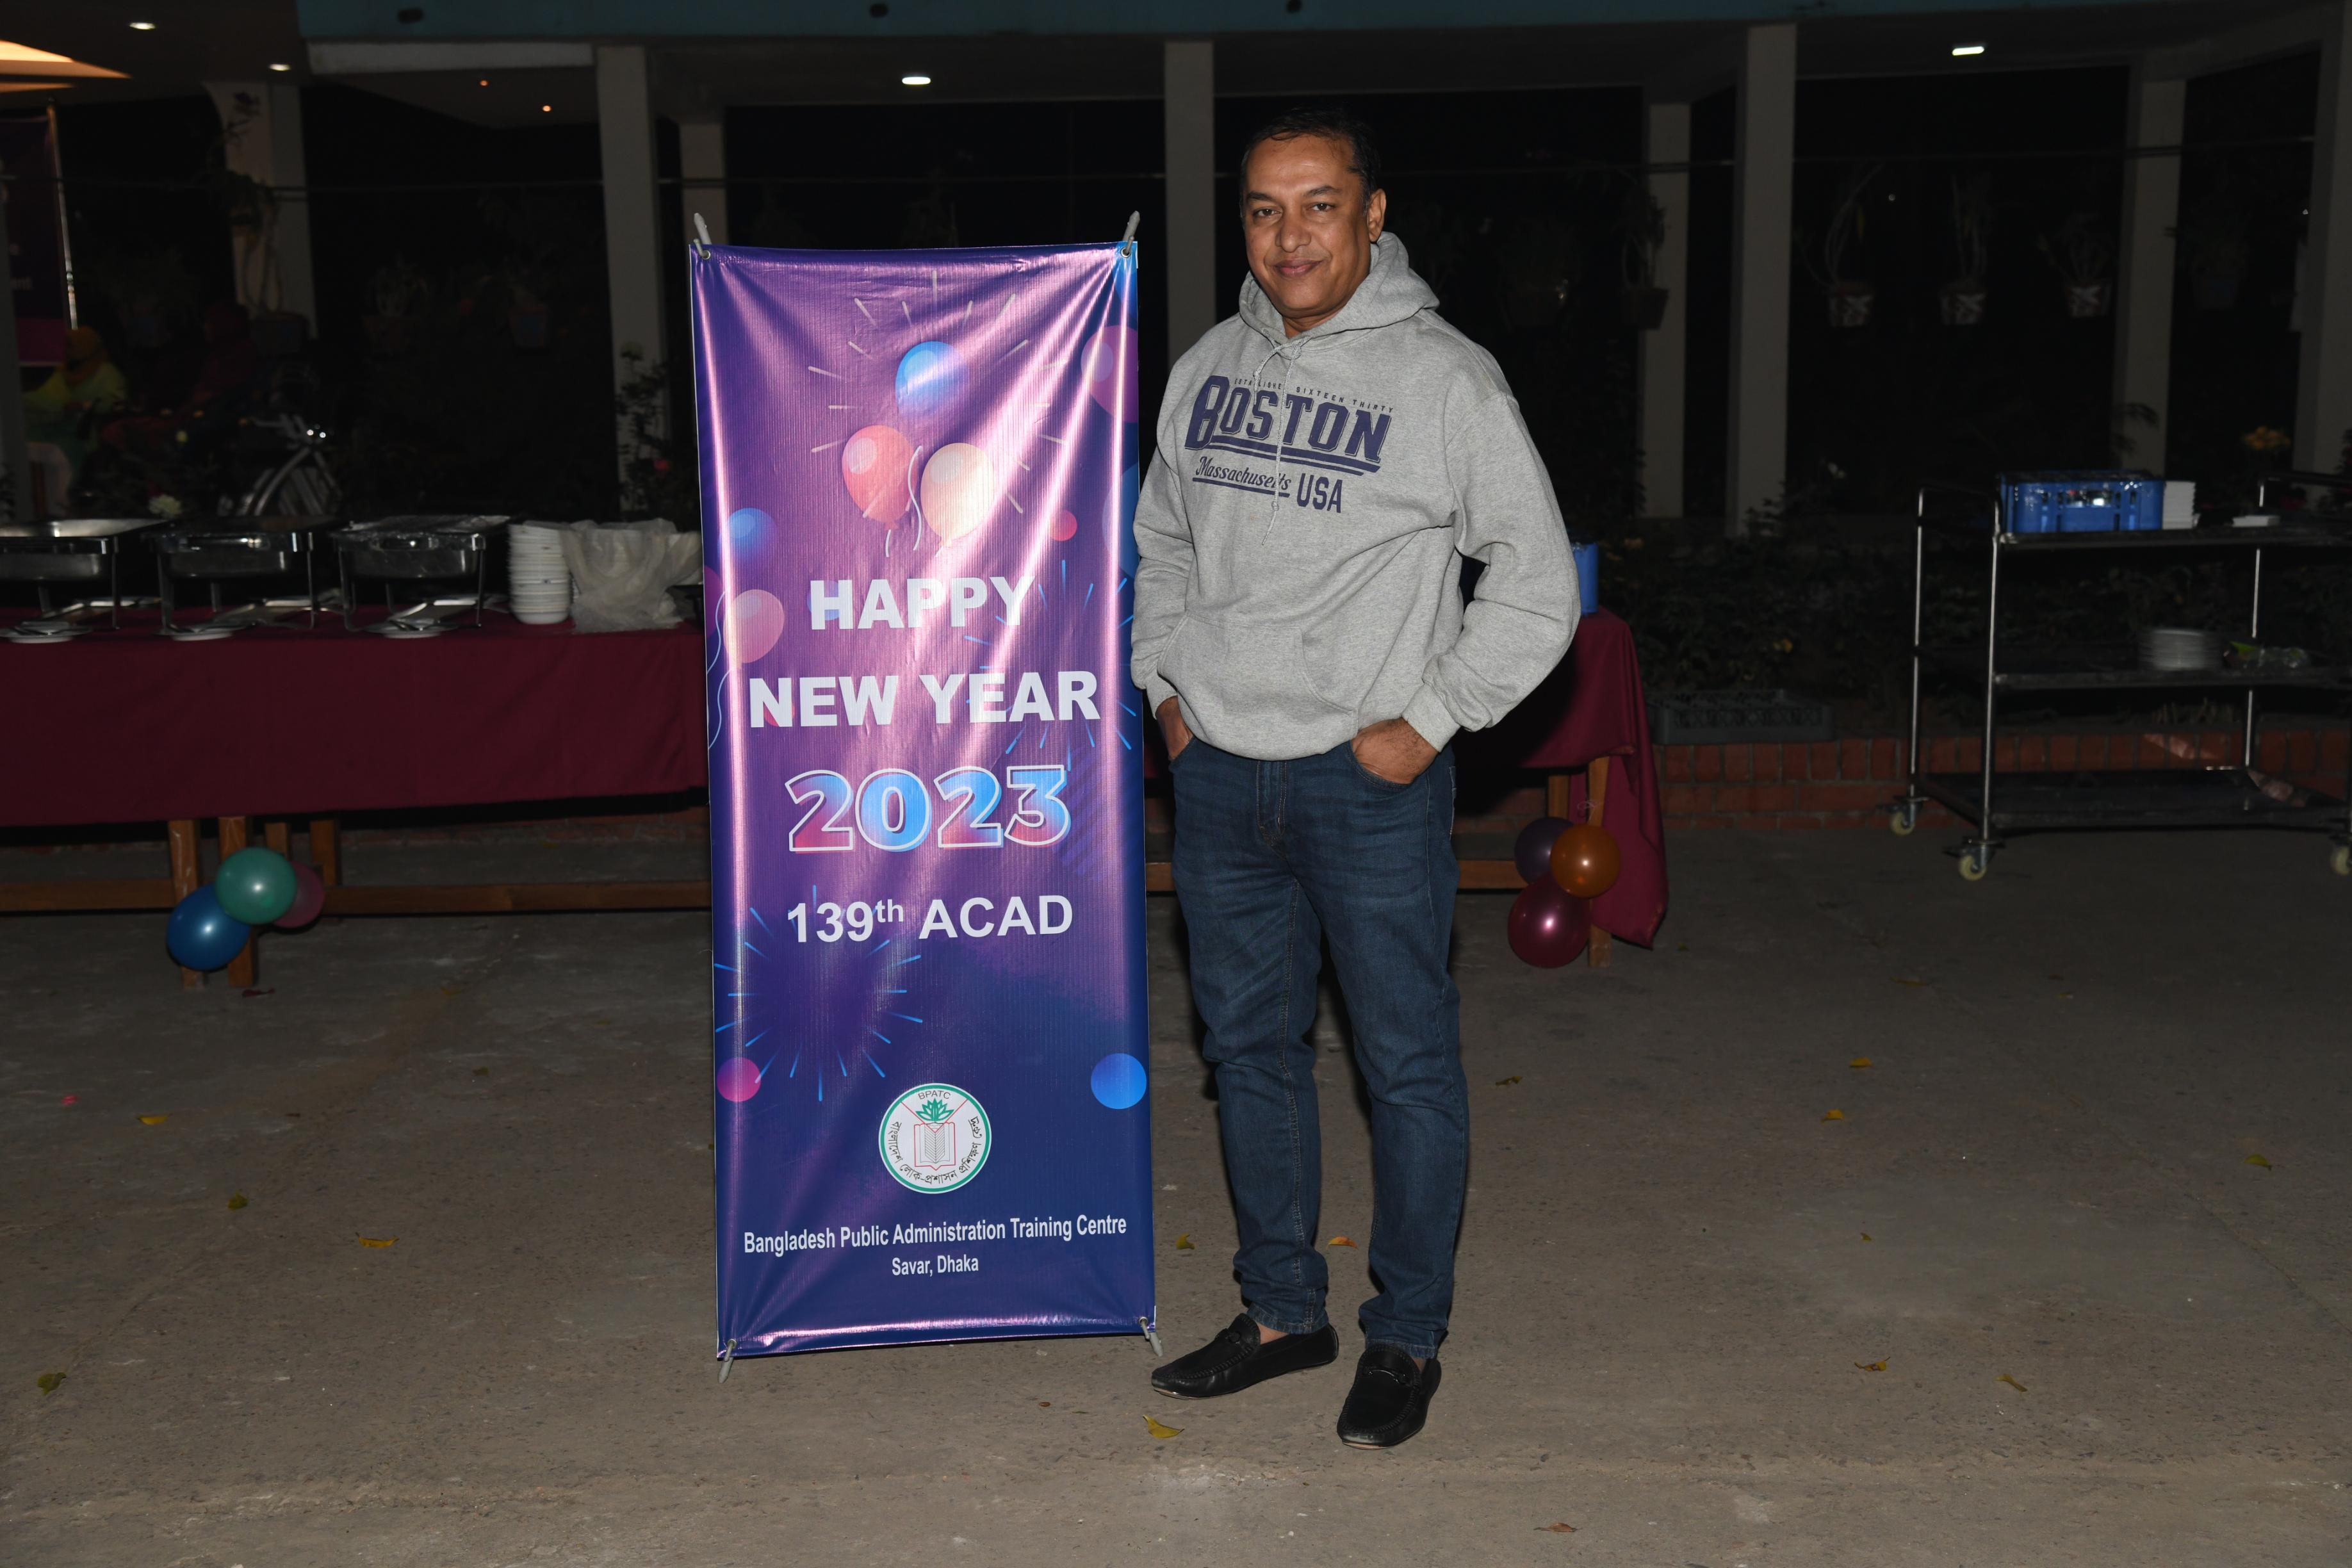 139th ACAD Happy New Year 2023 celebration